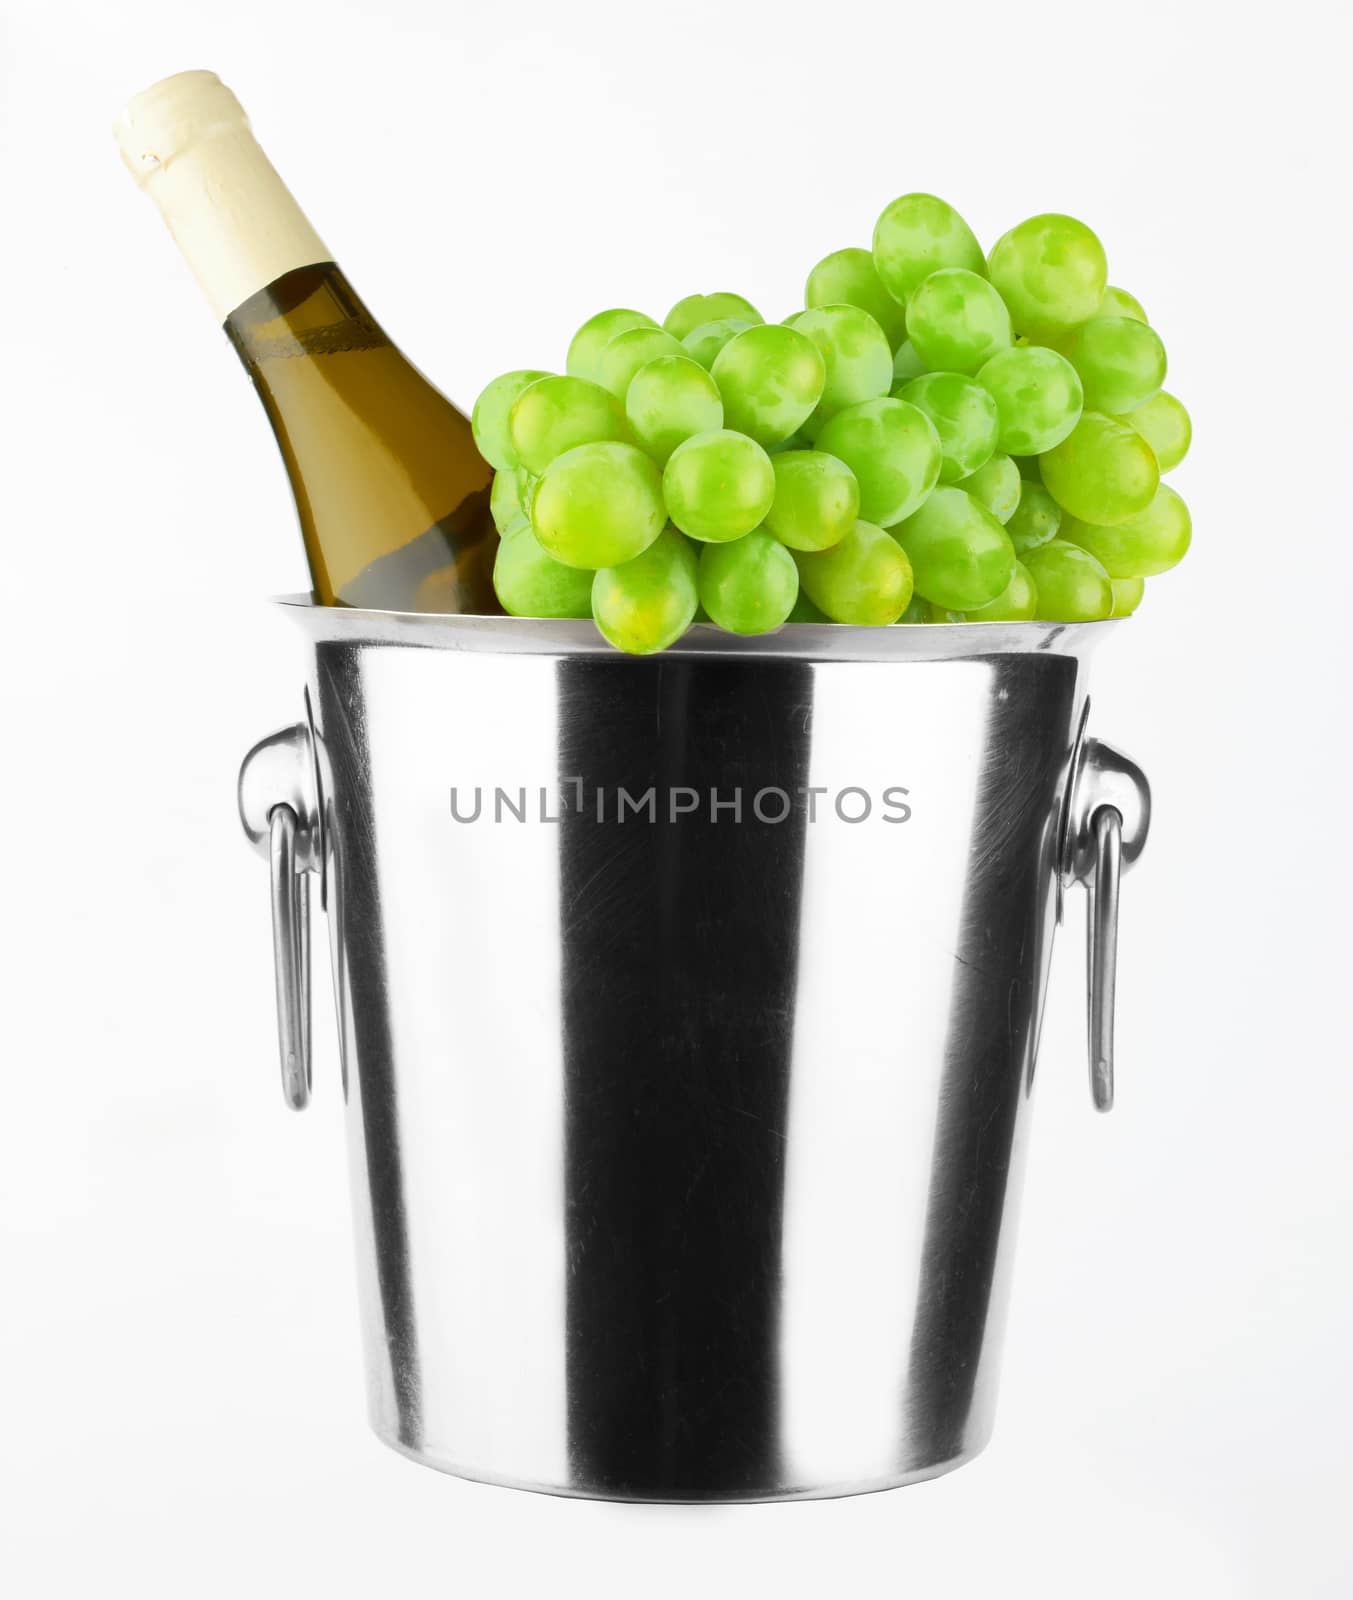 White wine bottle in cold ice bucket on white 